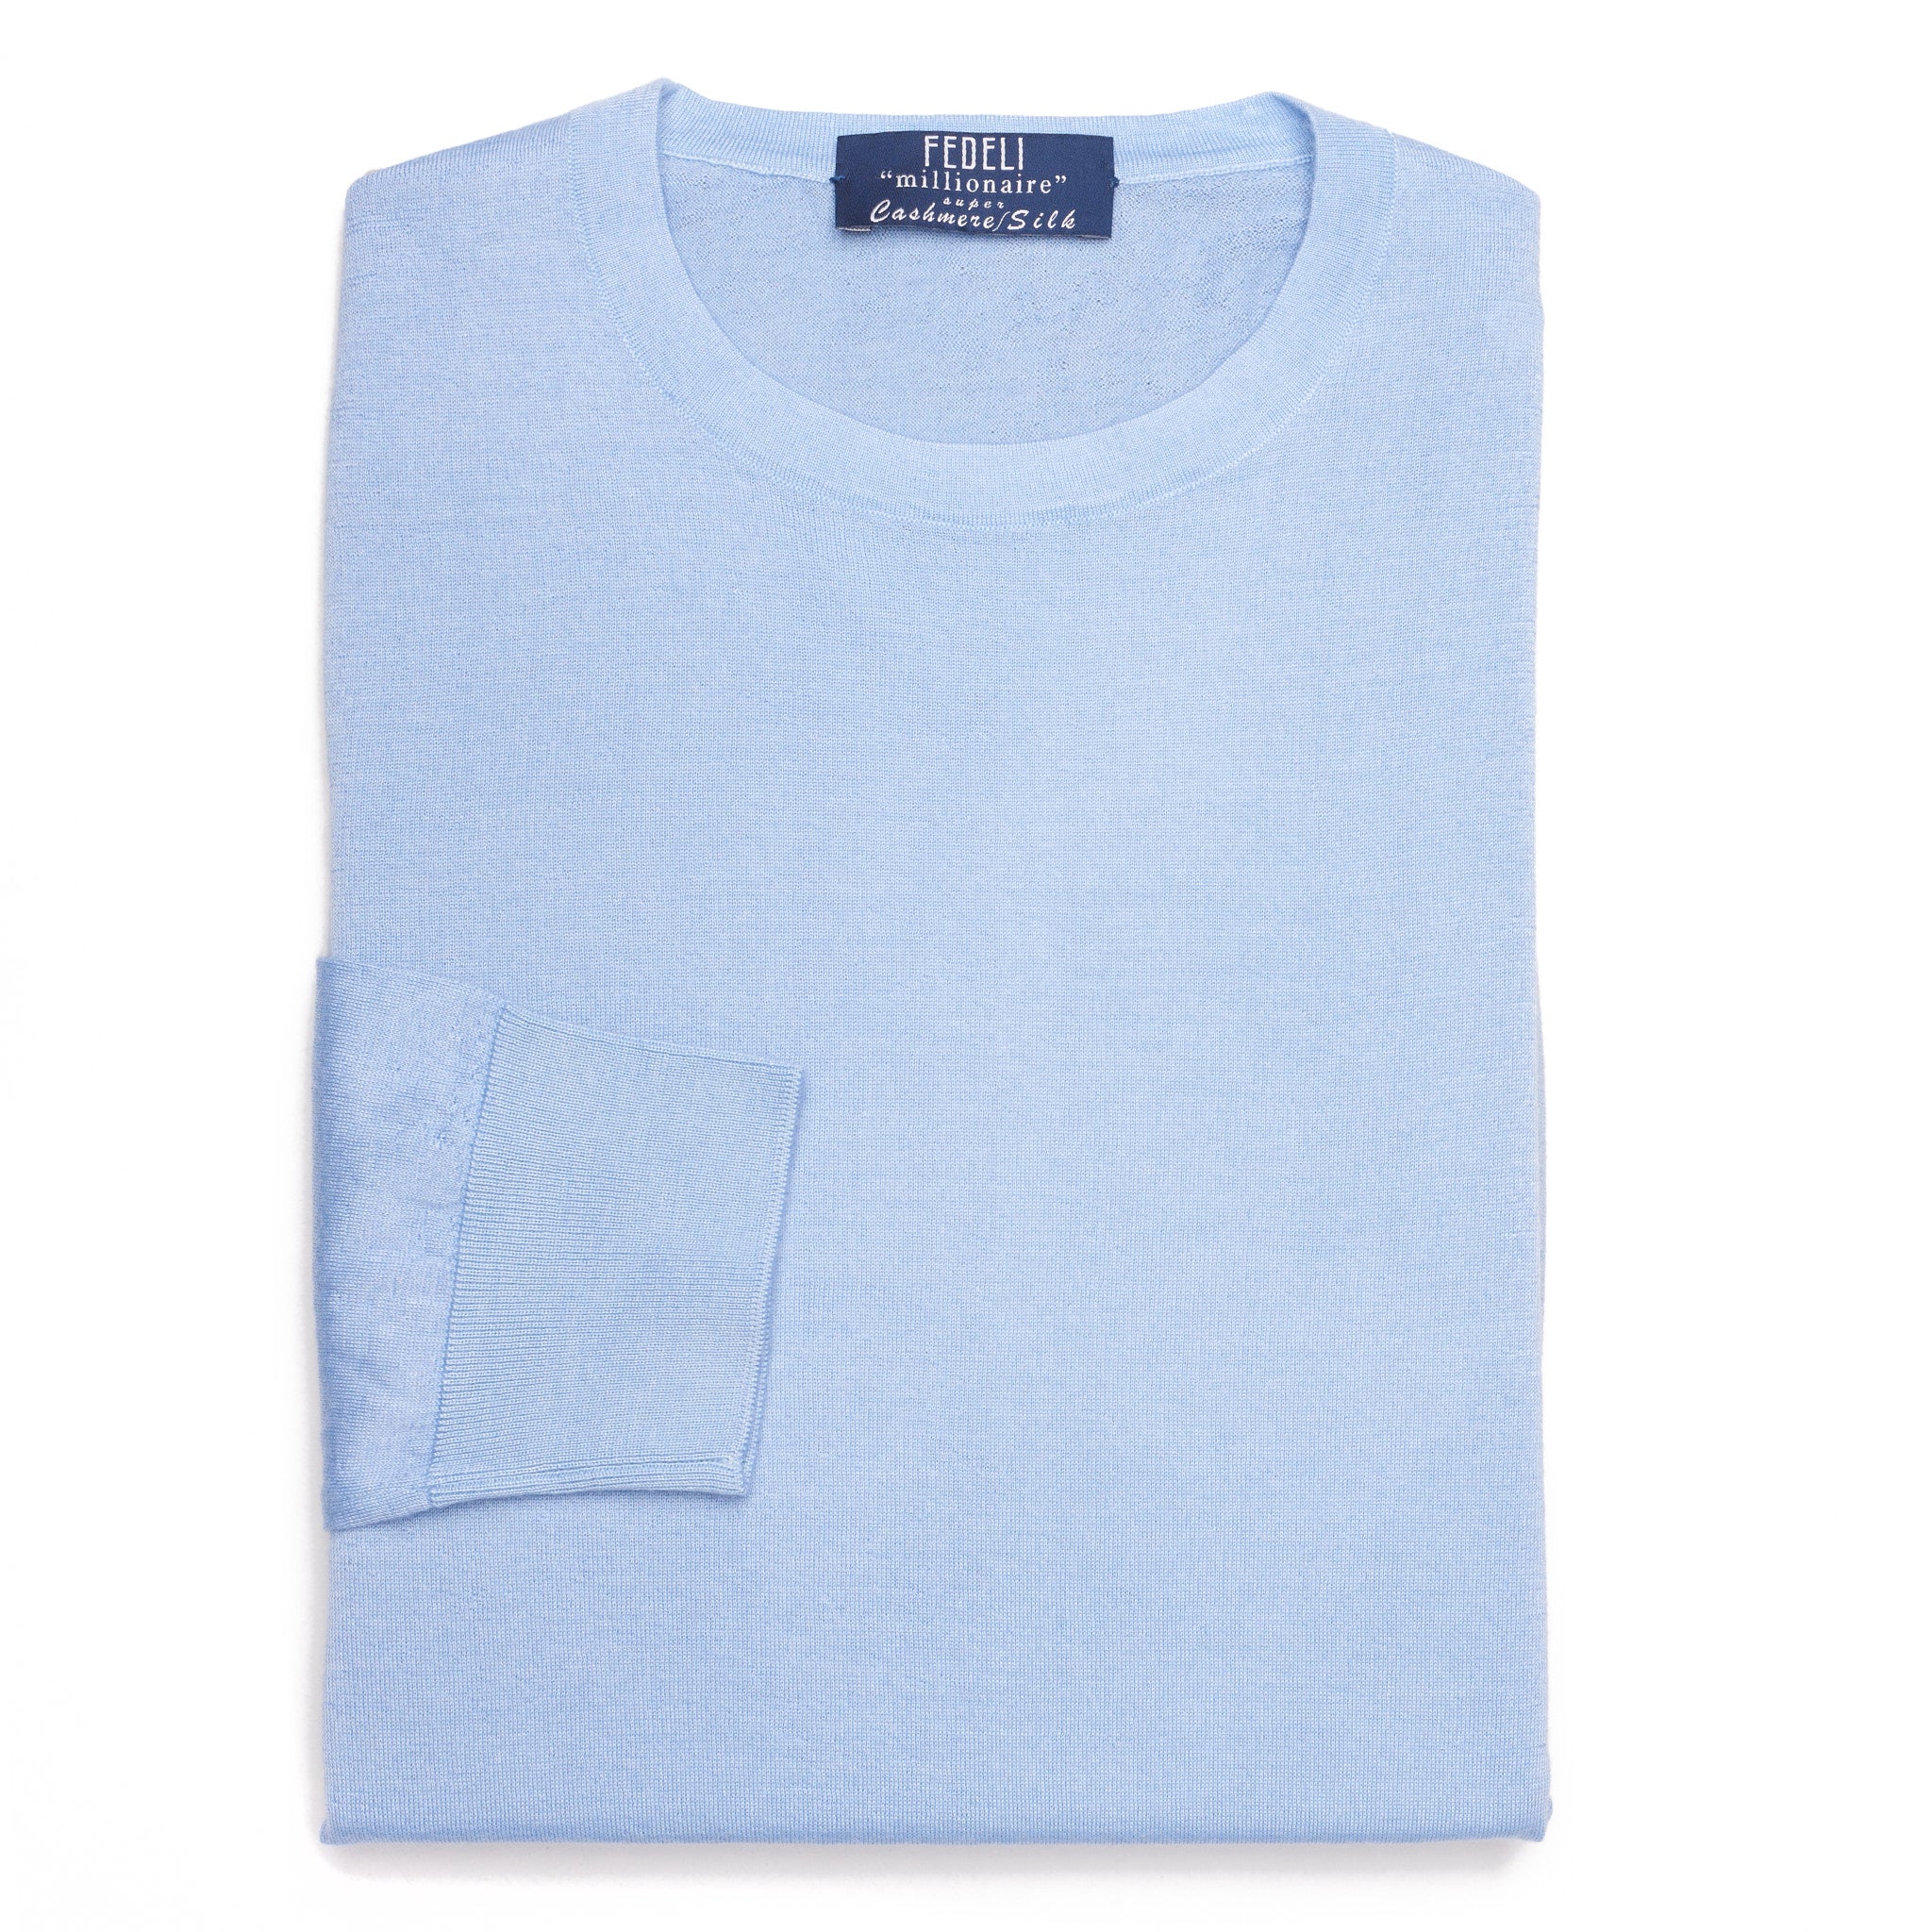 FEDELI Millionaire Blue Super Cashmere-Silk Crewneck Sweater 44 NEW US XXS FEDELI